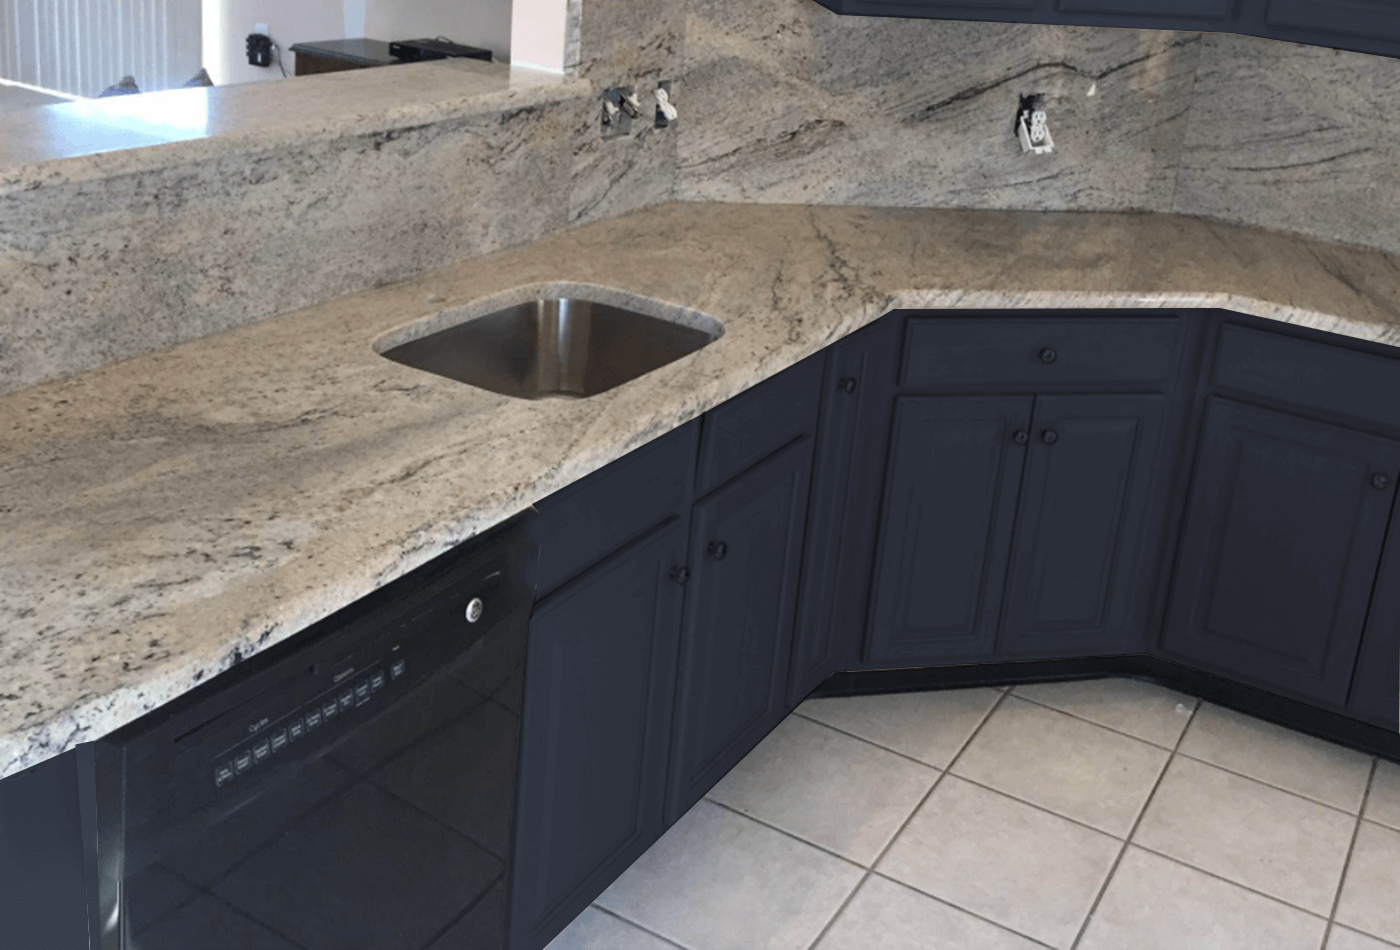 How to Design a Granite Kitchen